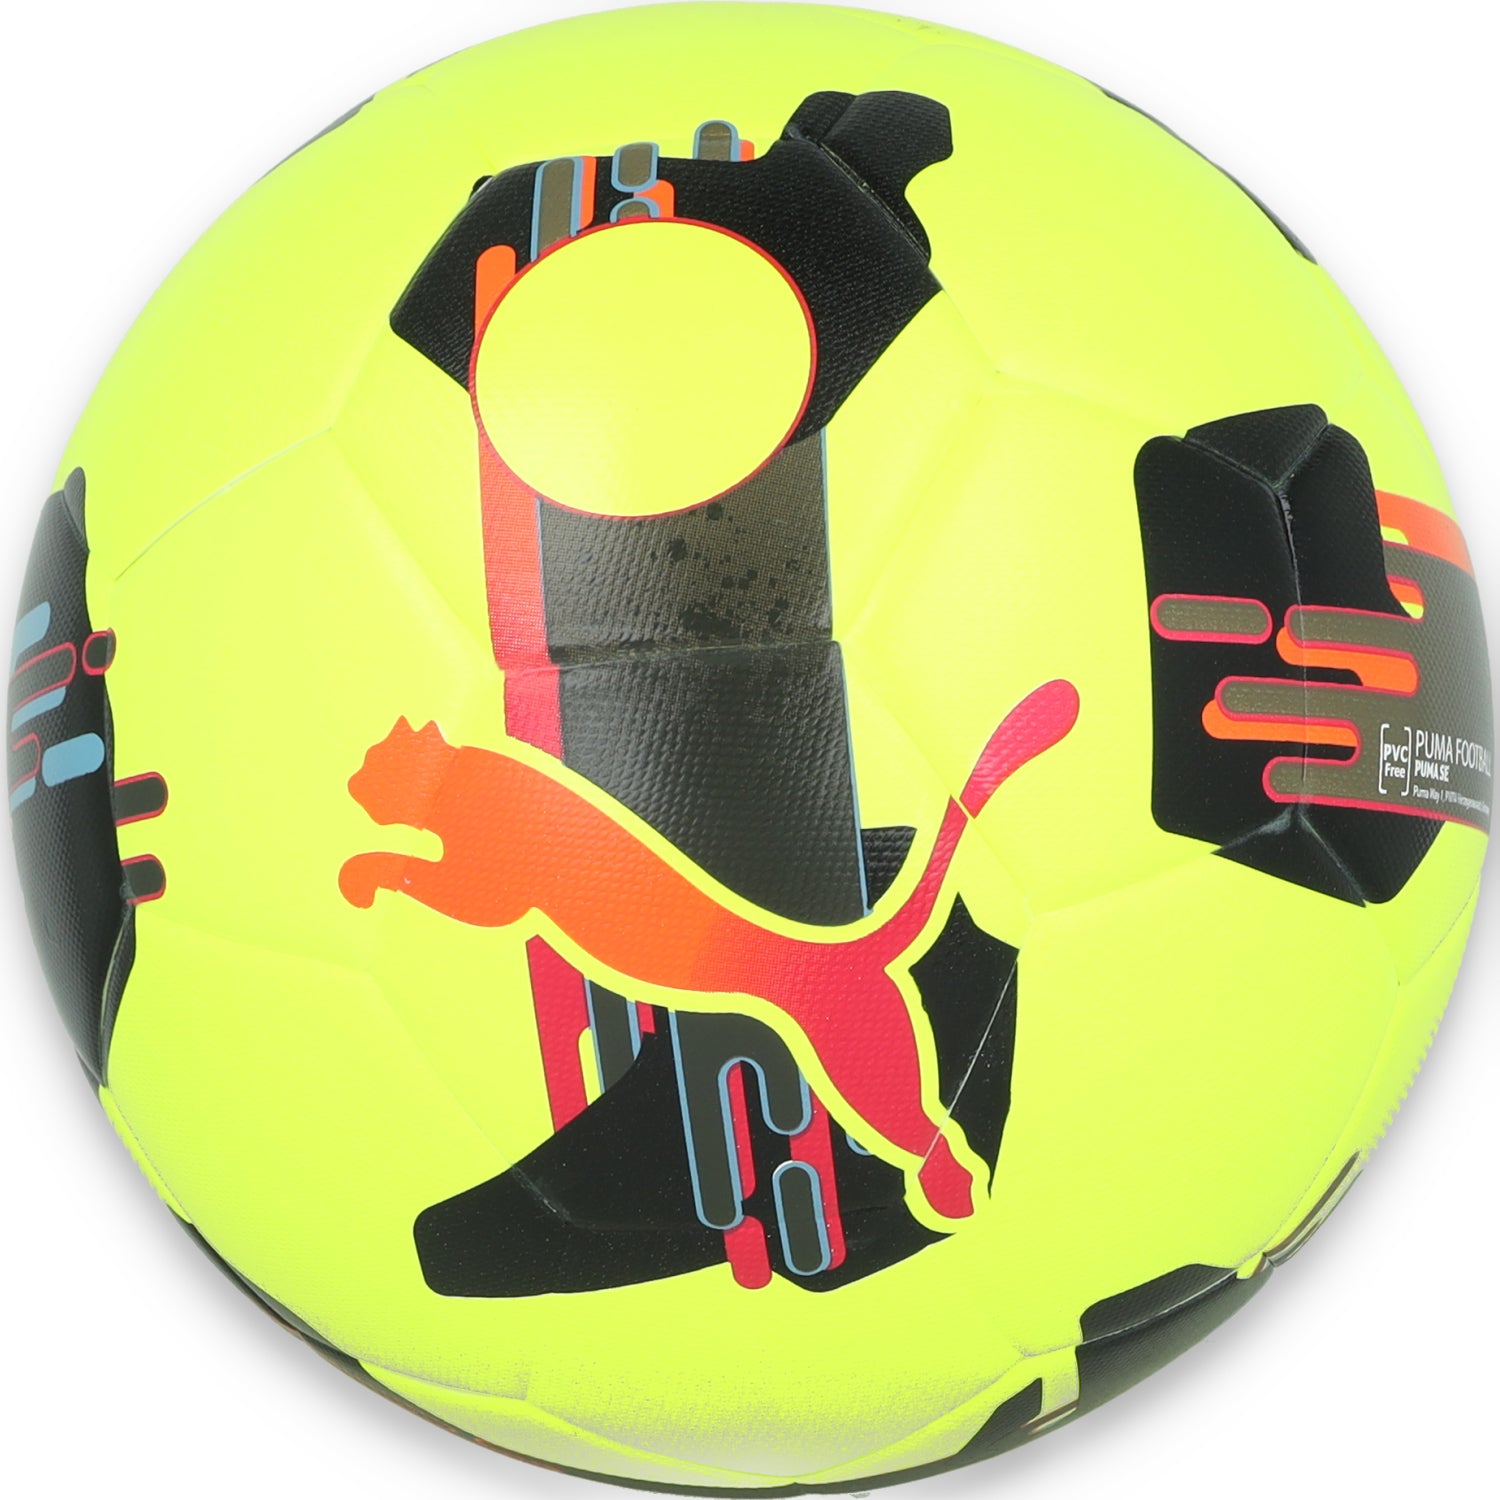 Puma Orbita 3 FIFA Quality NFHS Soccer Ball - Lemon Tonic-Multi